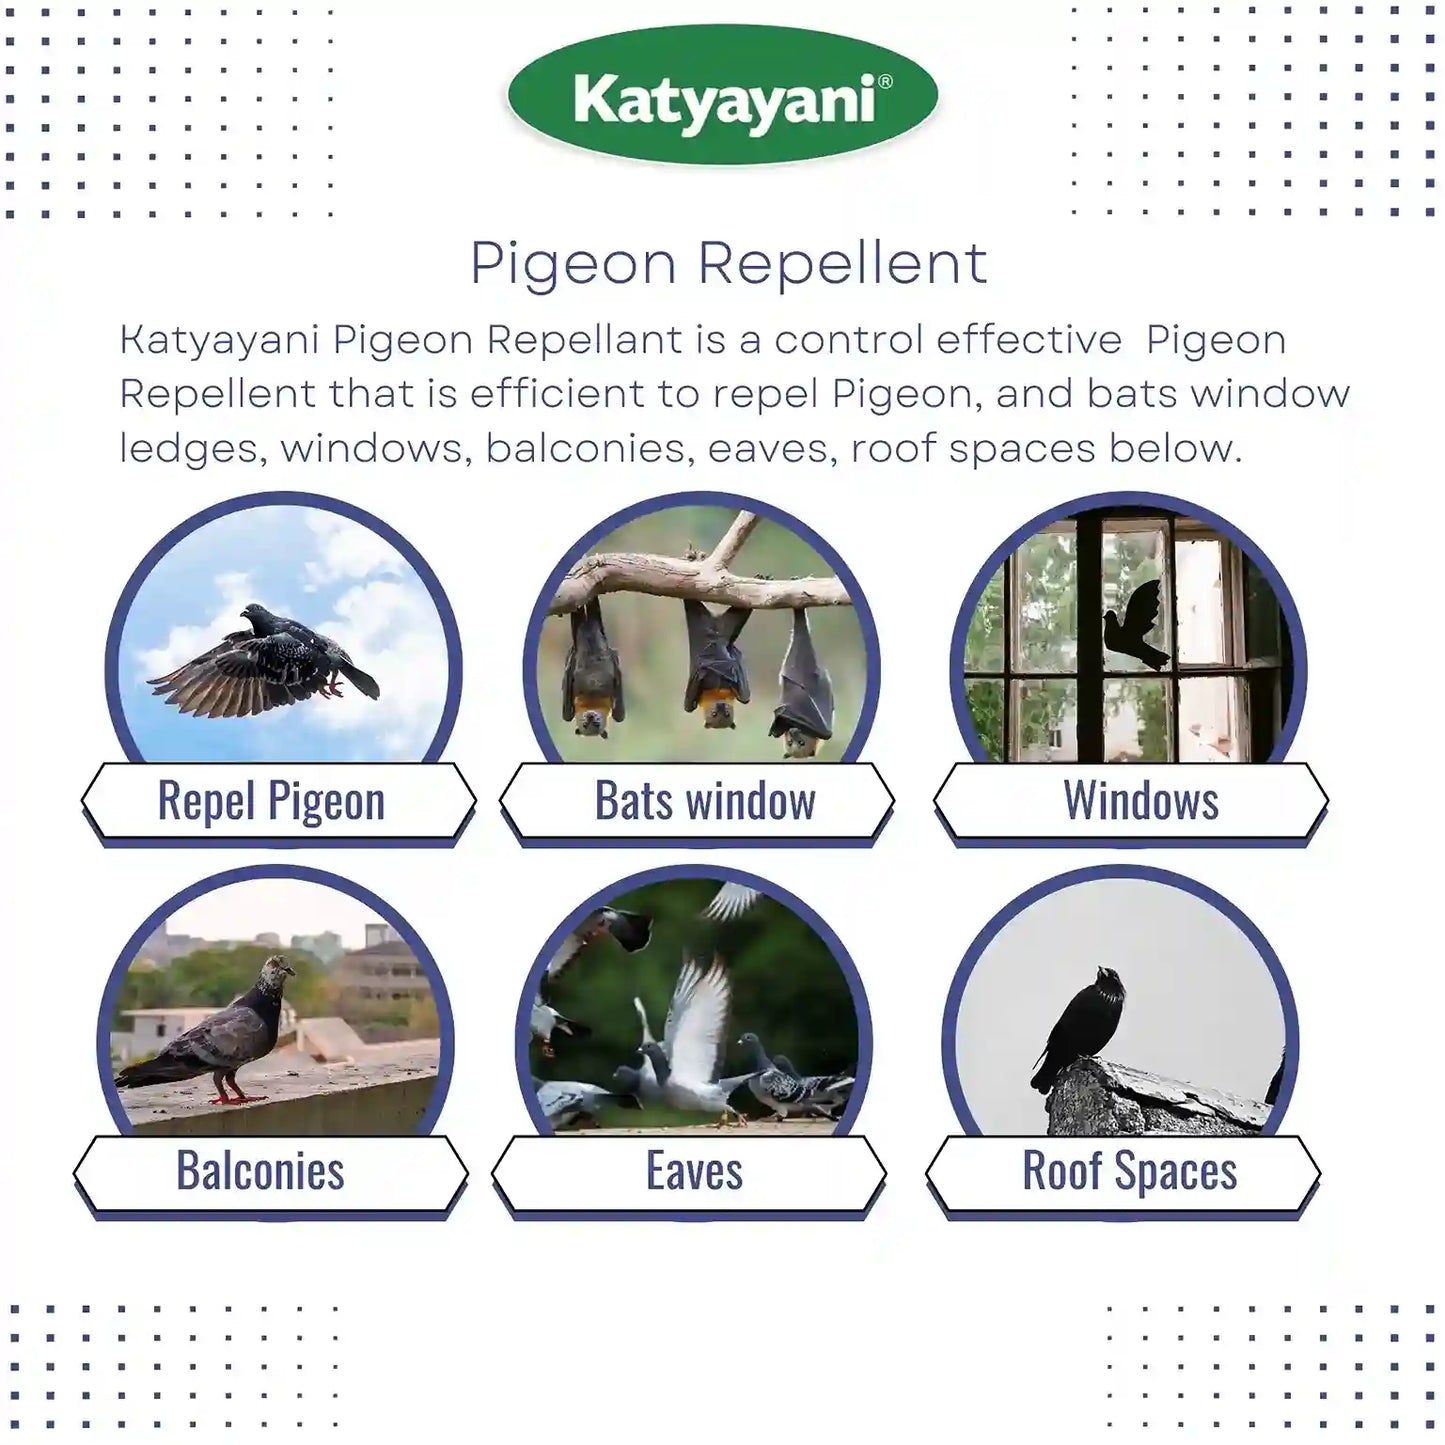 Katyayani Pigeon Repellant